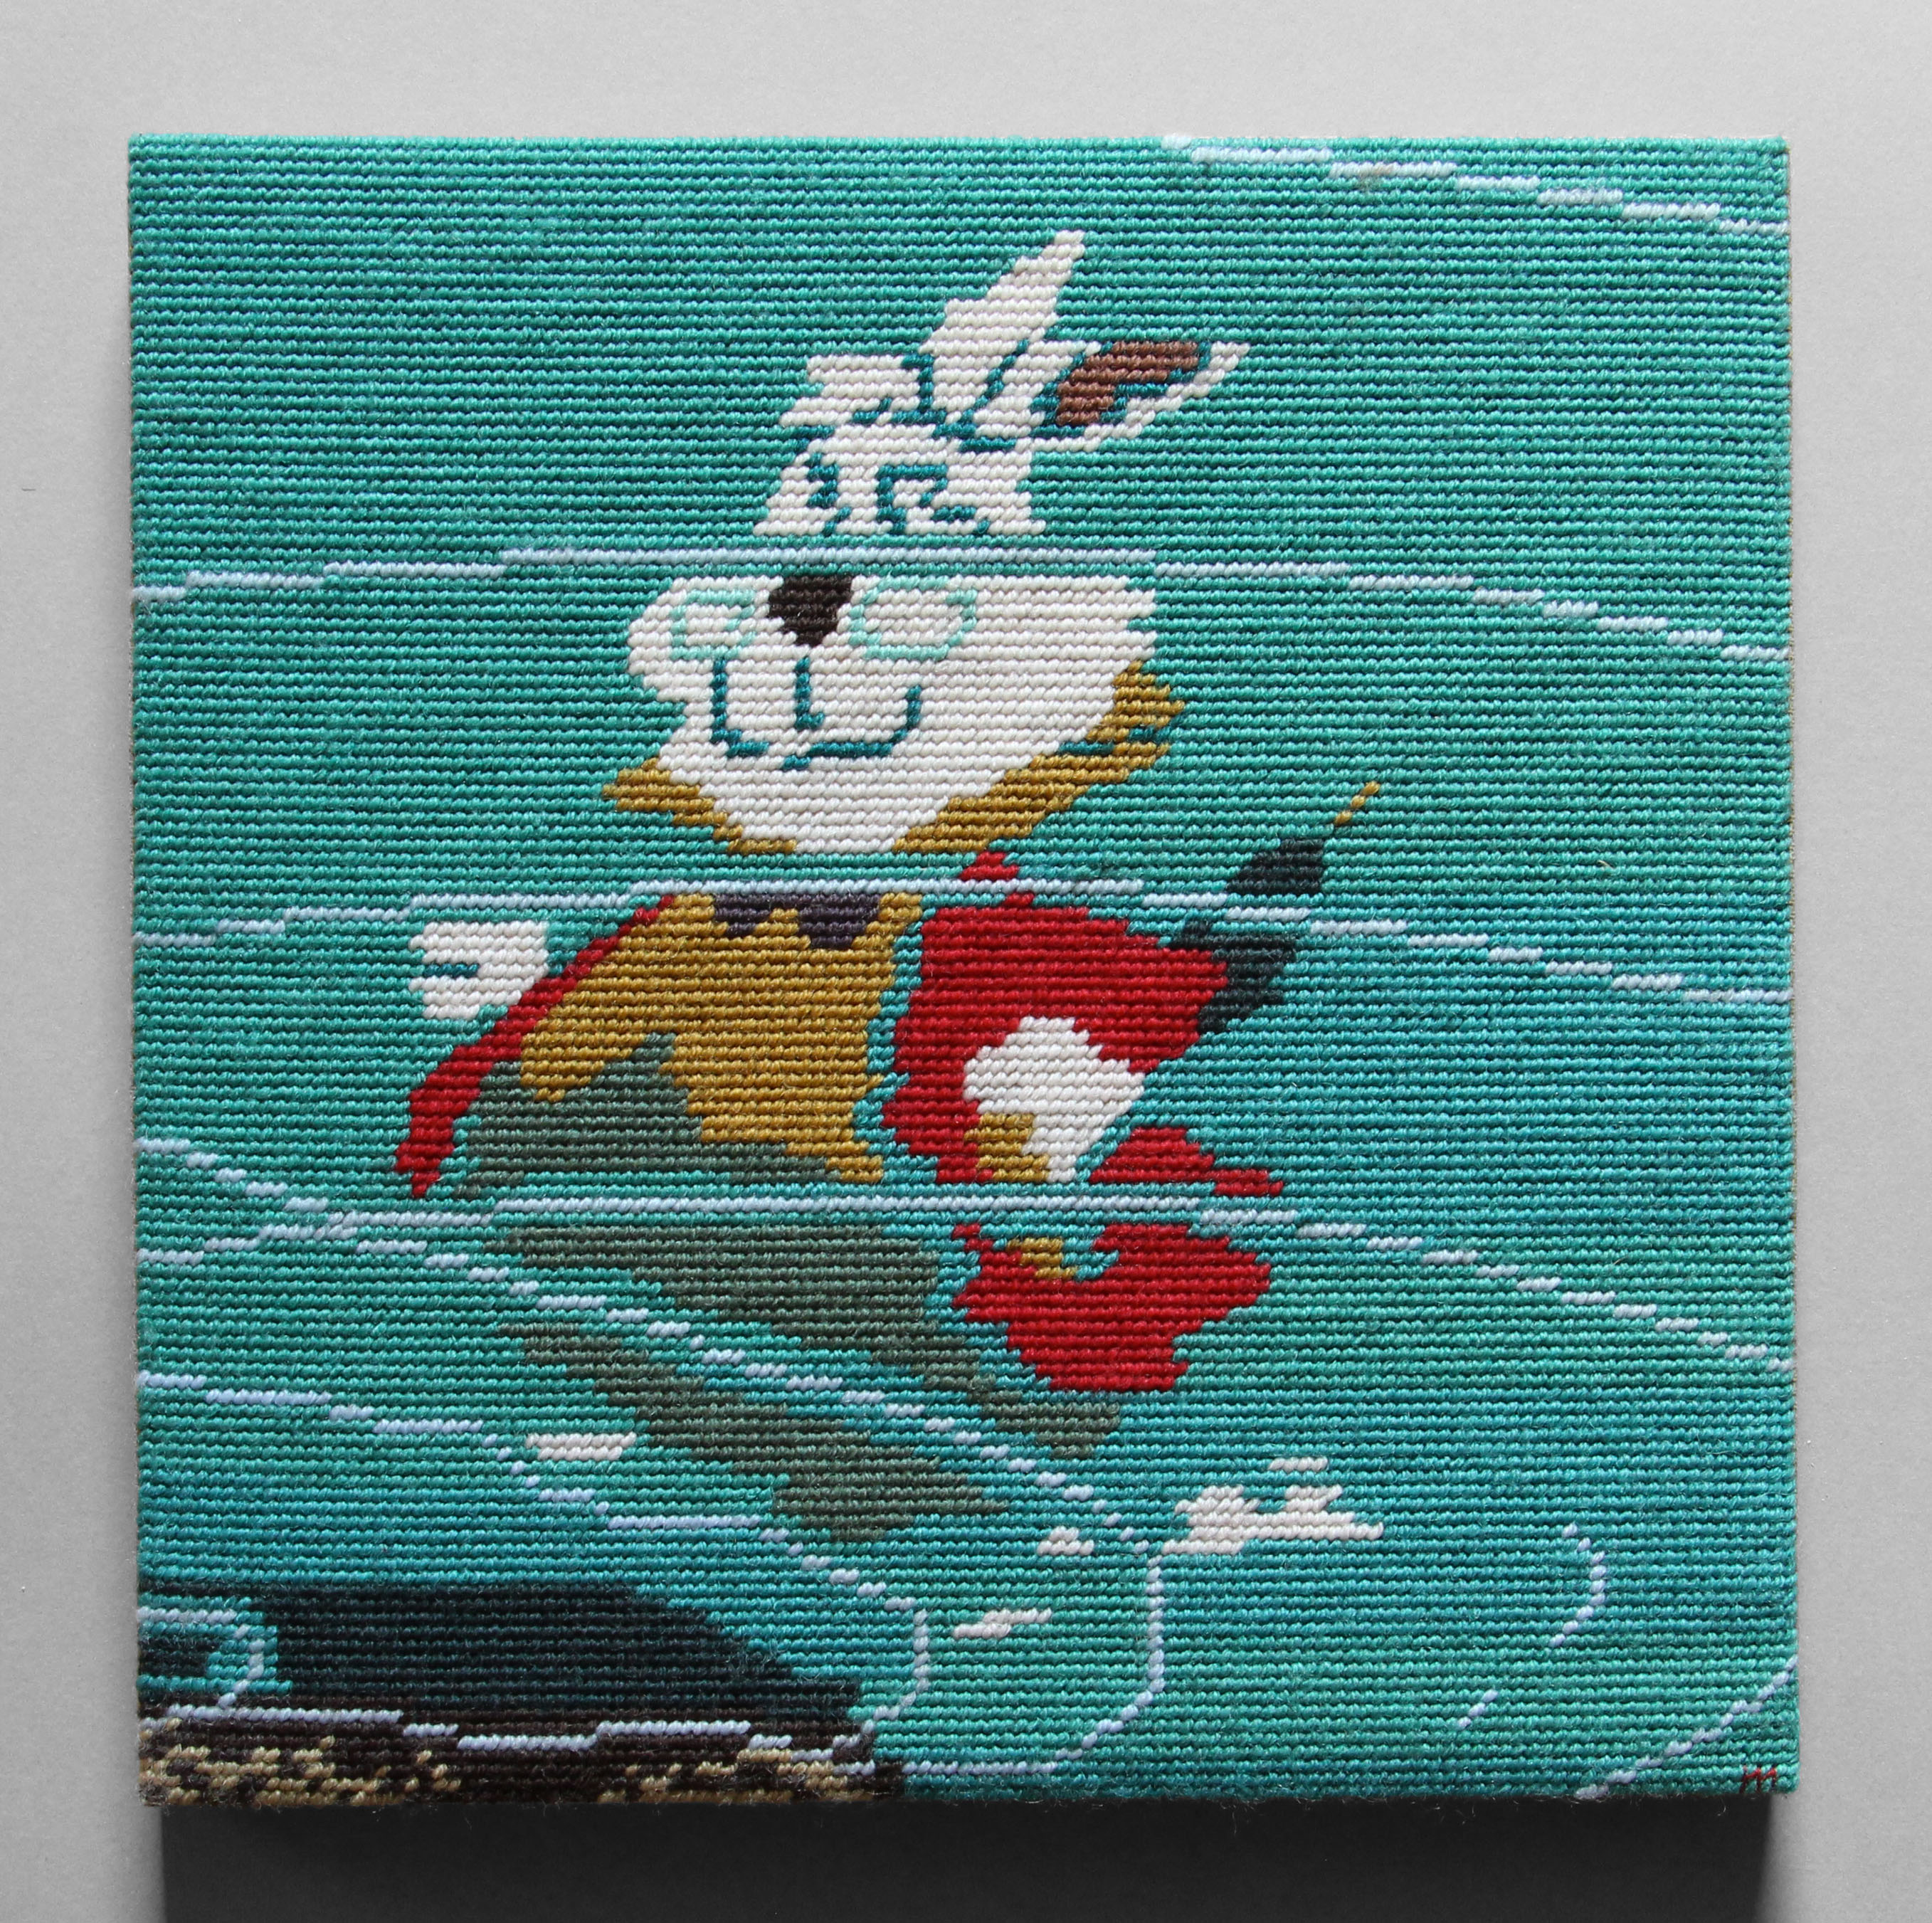  / Needlepoint of the White Rabbit, from the Disney animated film *Alice in Wonderland*. Art by artist Marine Beaufils.